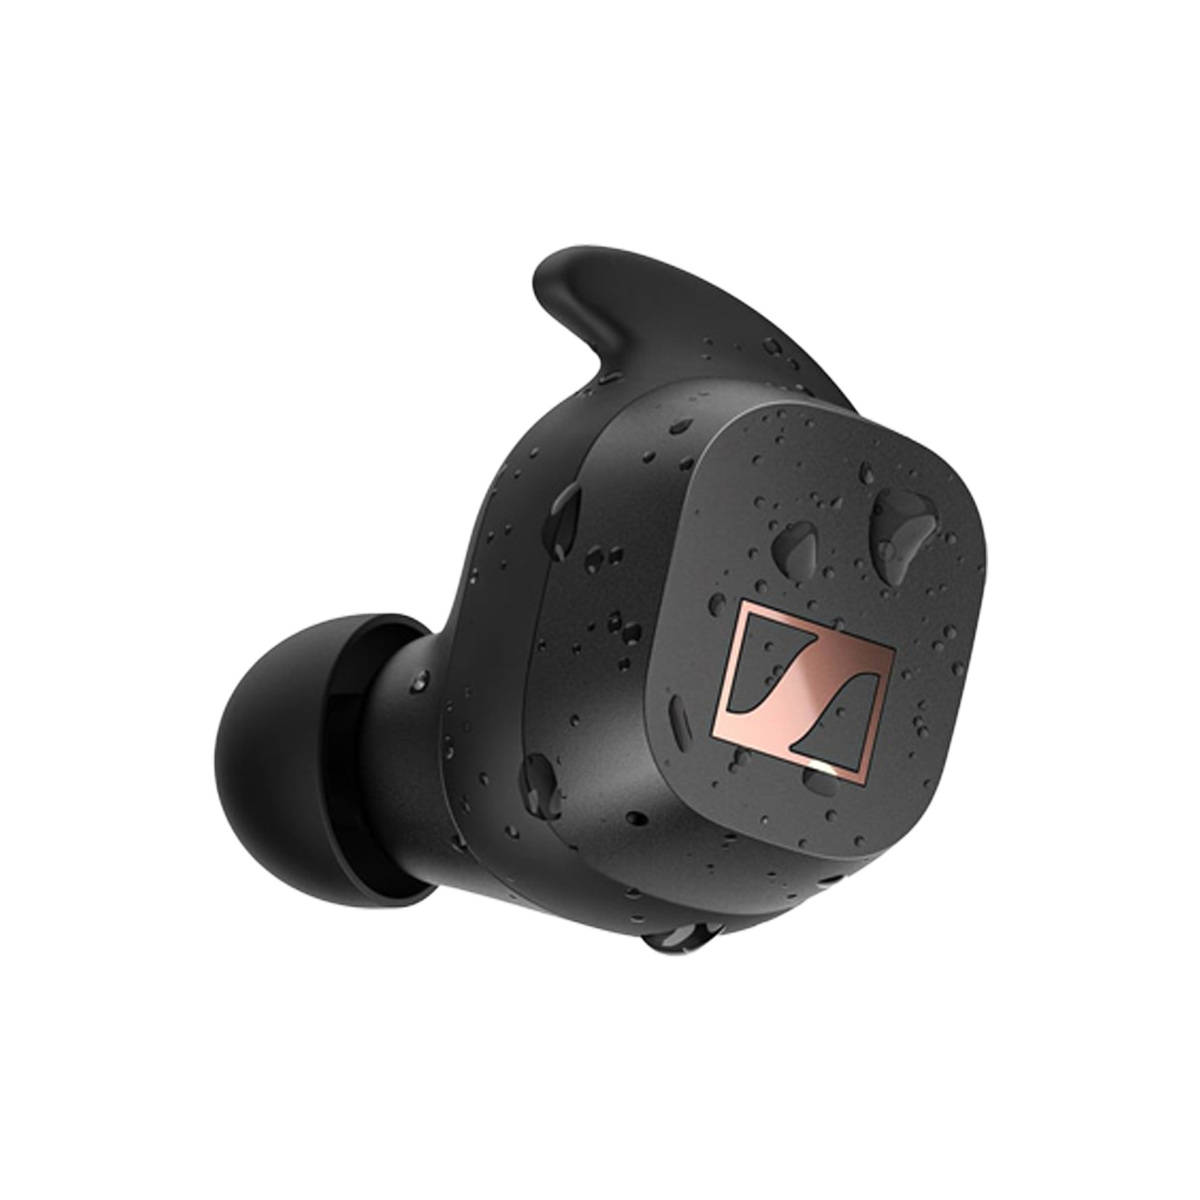 Sennheiser True Wireless Earbuds CX-200 TW1 Black